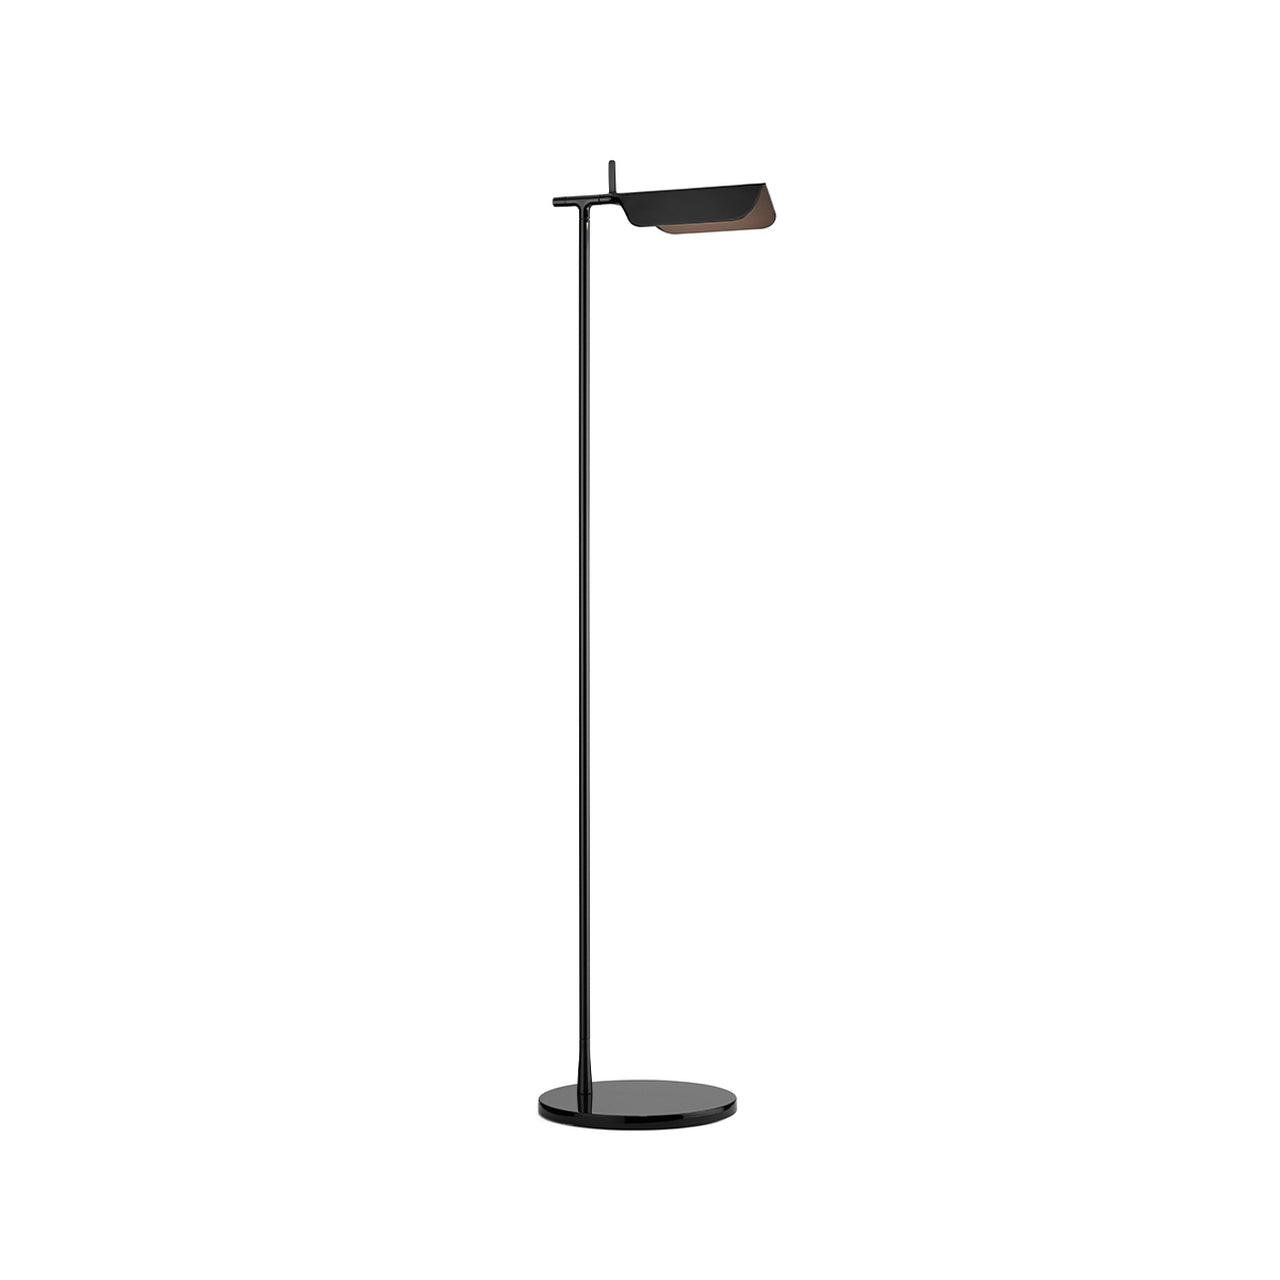 Black Tab Floor Lamp with UK Plug, Diameter 11.8" x Height 59" (30cm x 150cm)